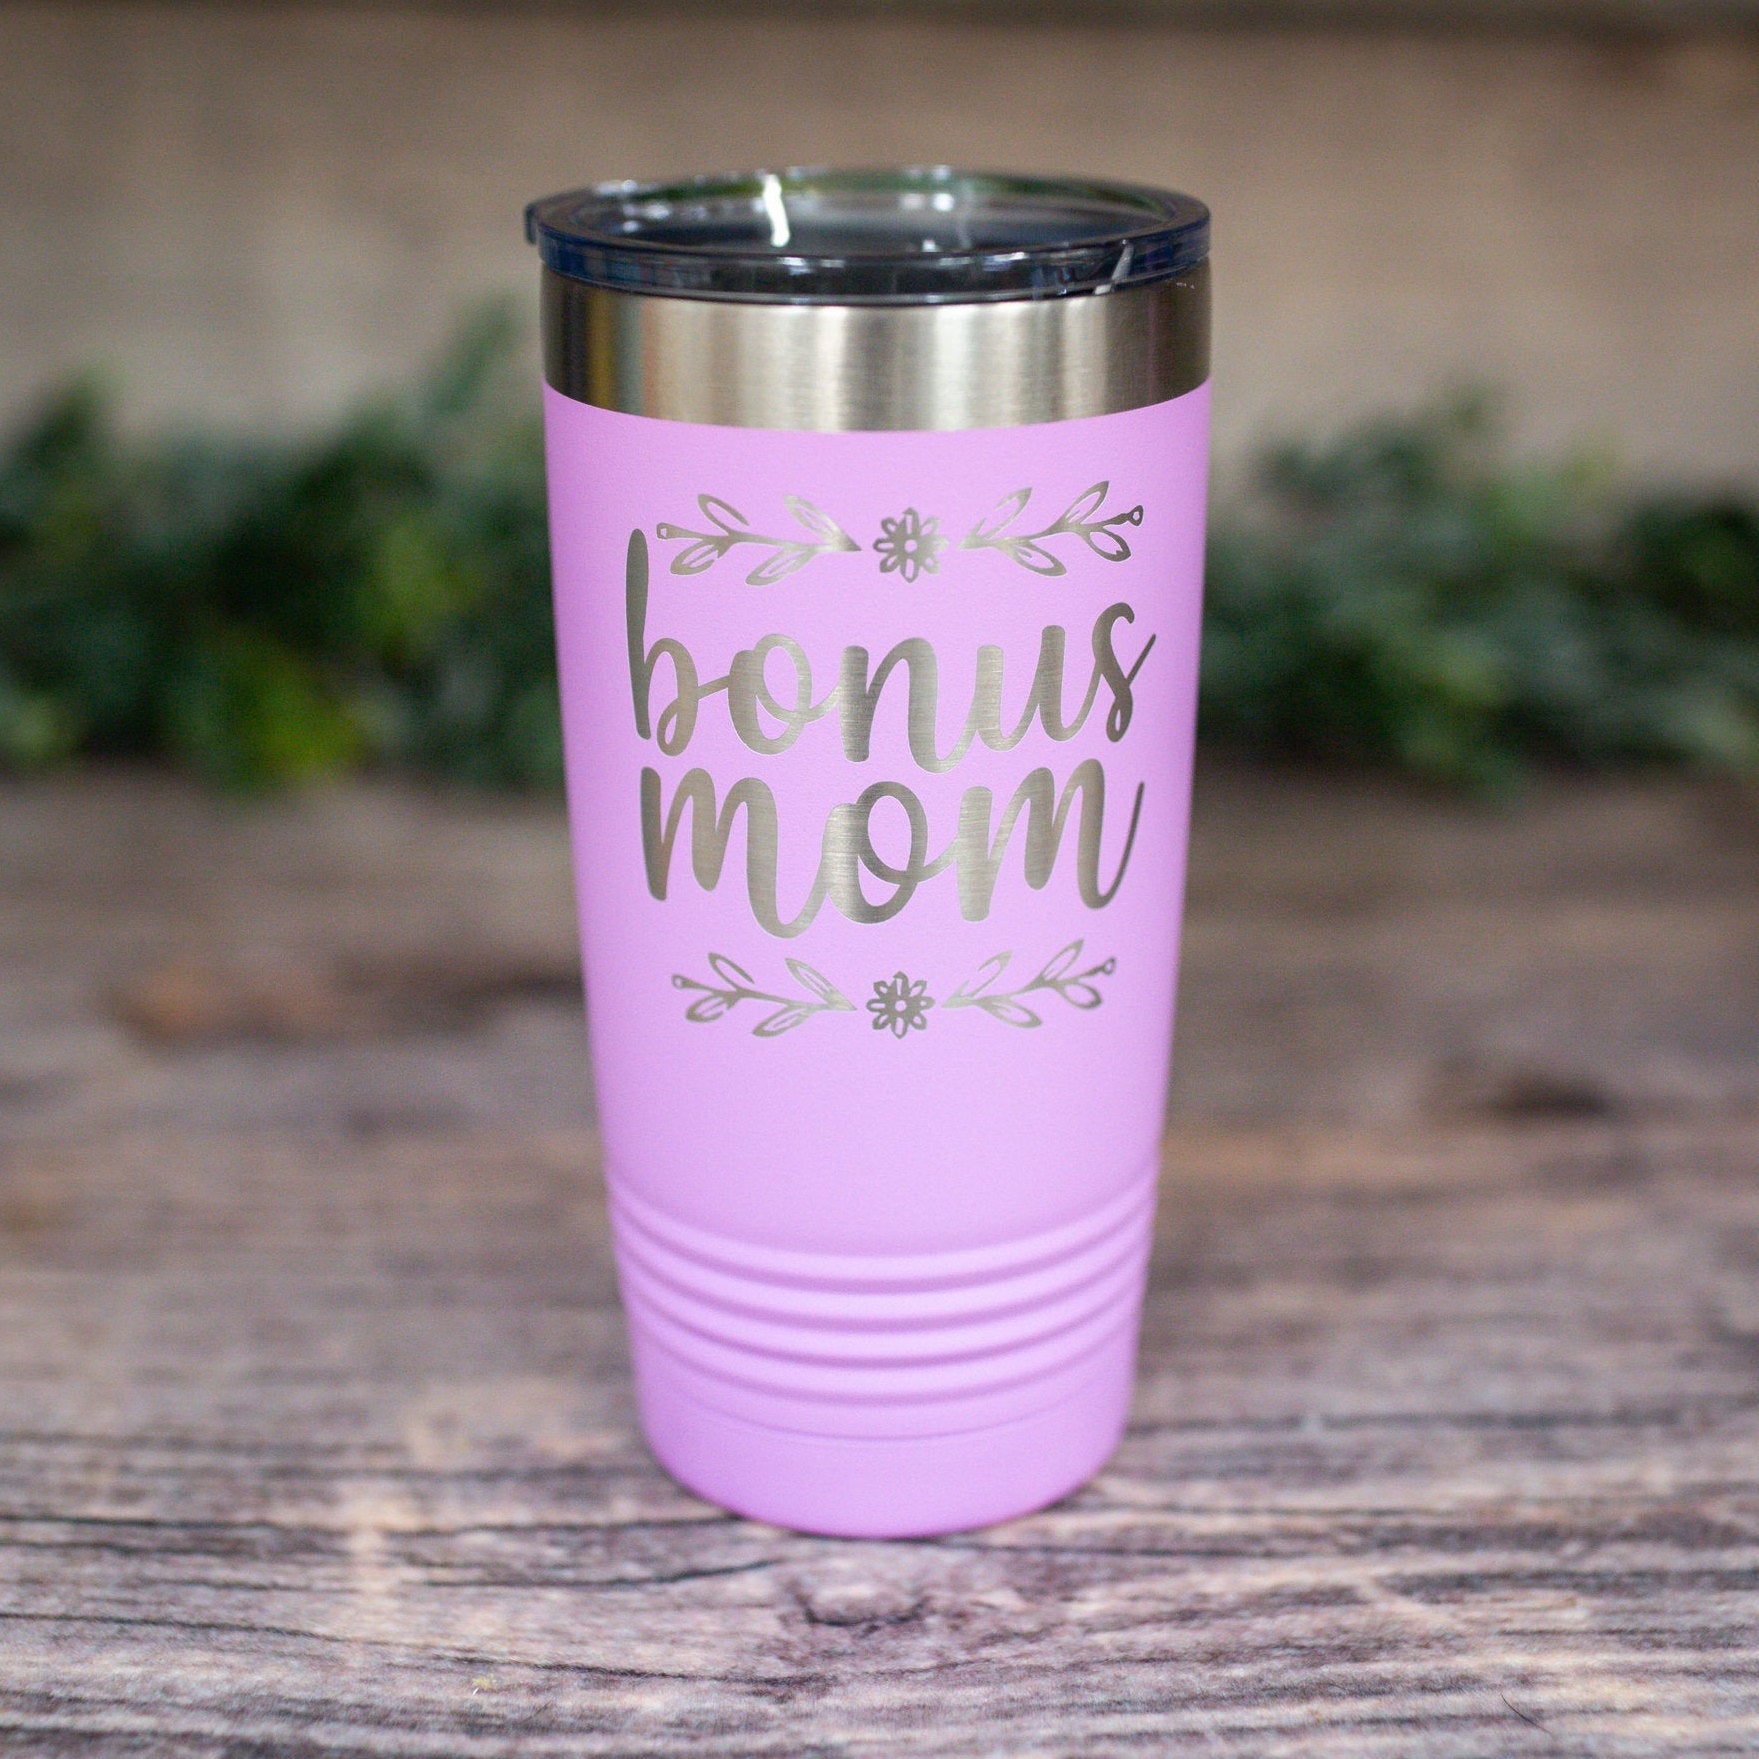 https://3cetching.com/wp-content/uploads/2021/07/bonus-mom-engraved-stainless-tumbler-funny-mug-for-her-mug-for-mom-60f76bef.jpg